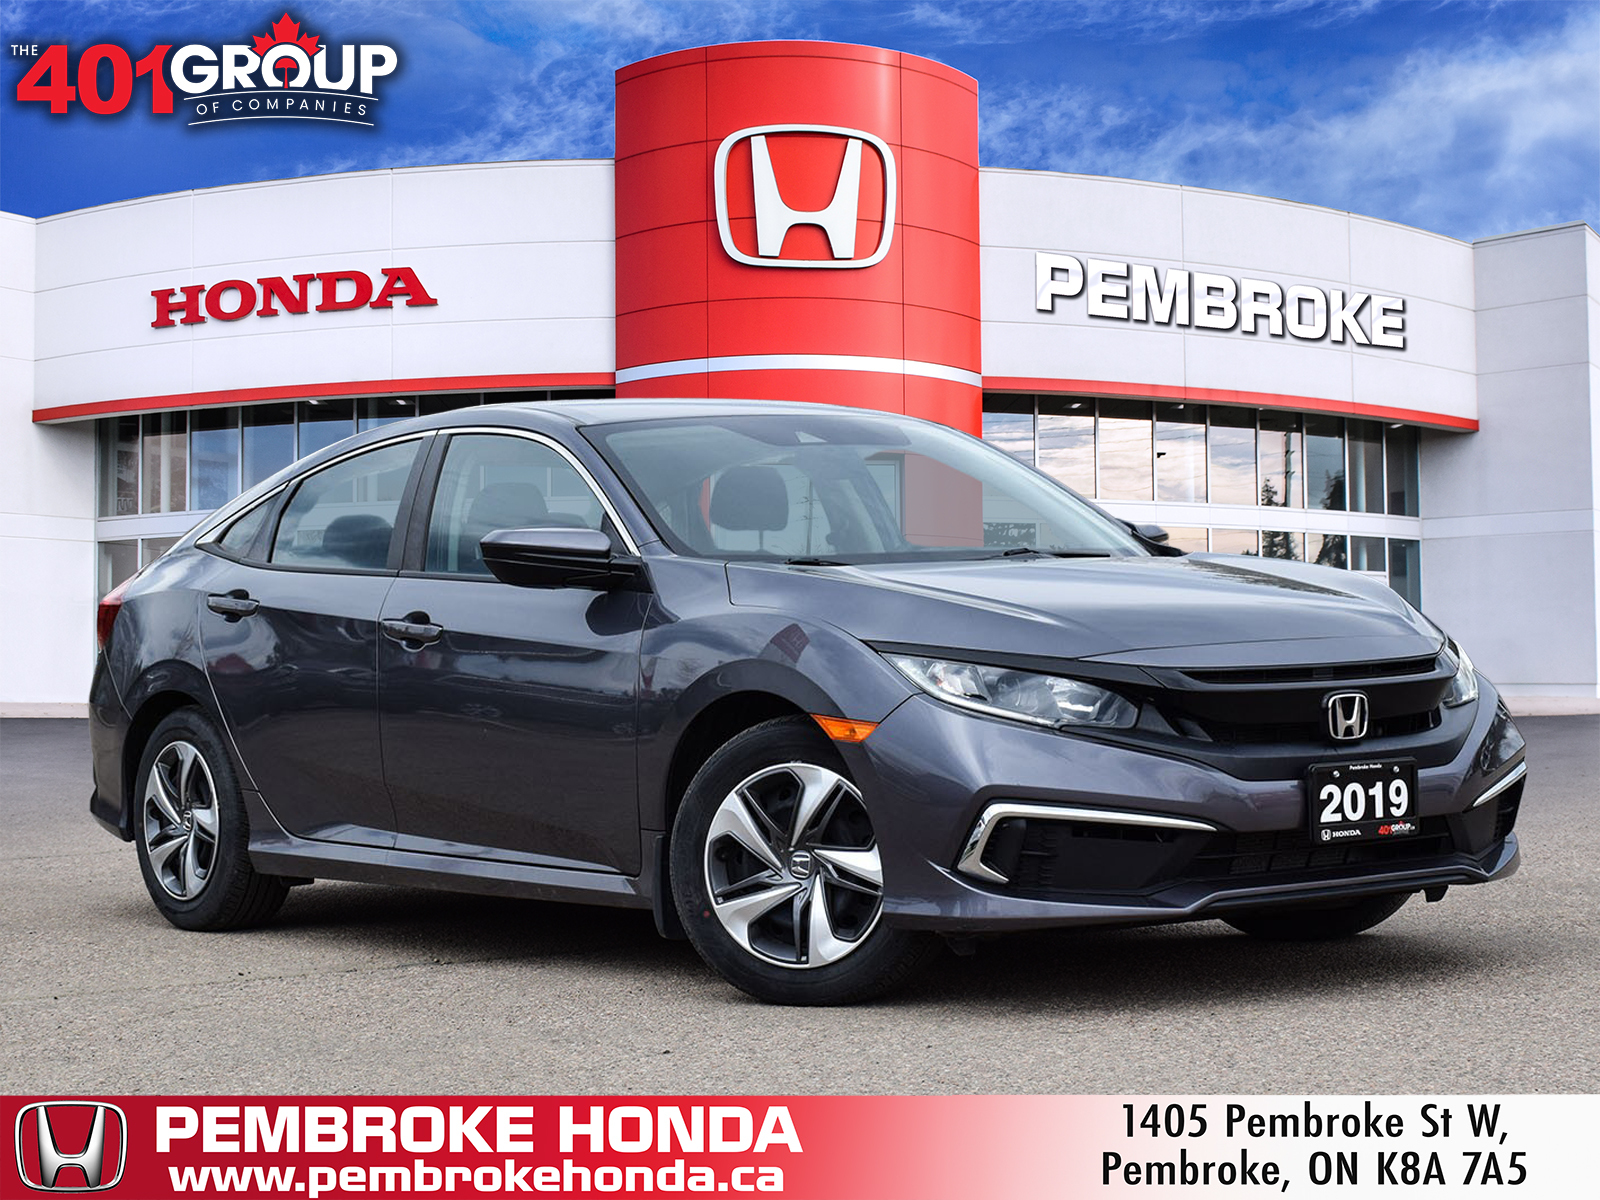 2019 Honda Civic Sedan LX 6-Spd | CarPlay/Auto | HondaSense | Heated Seat